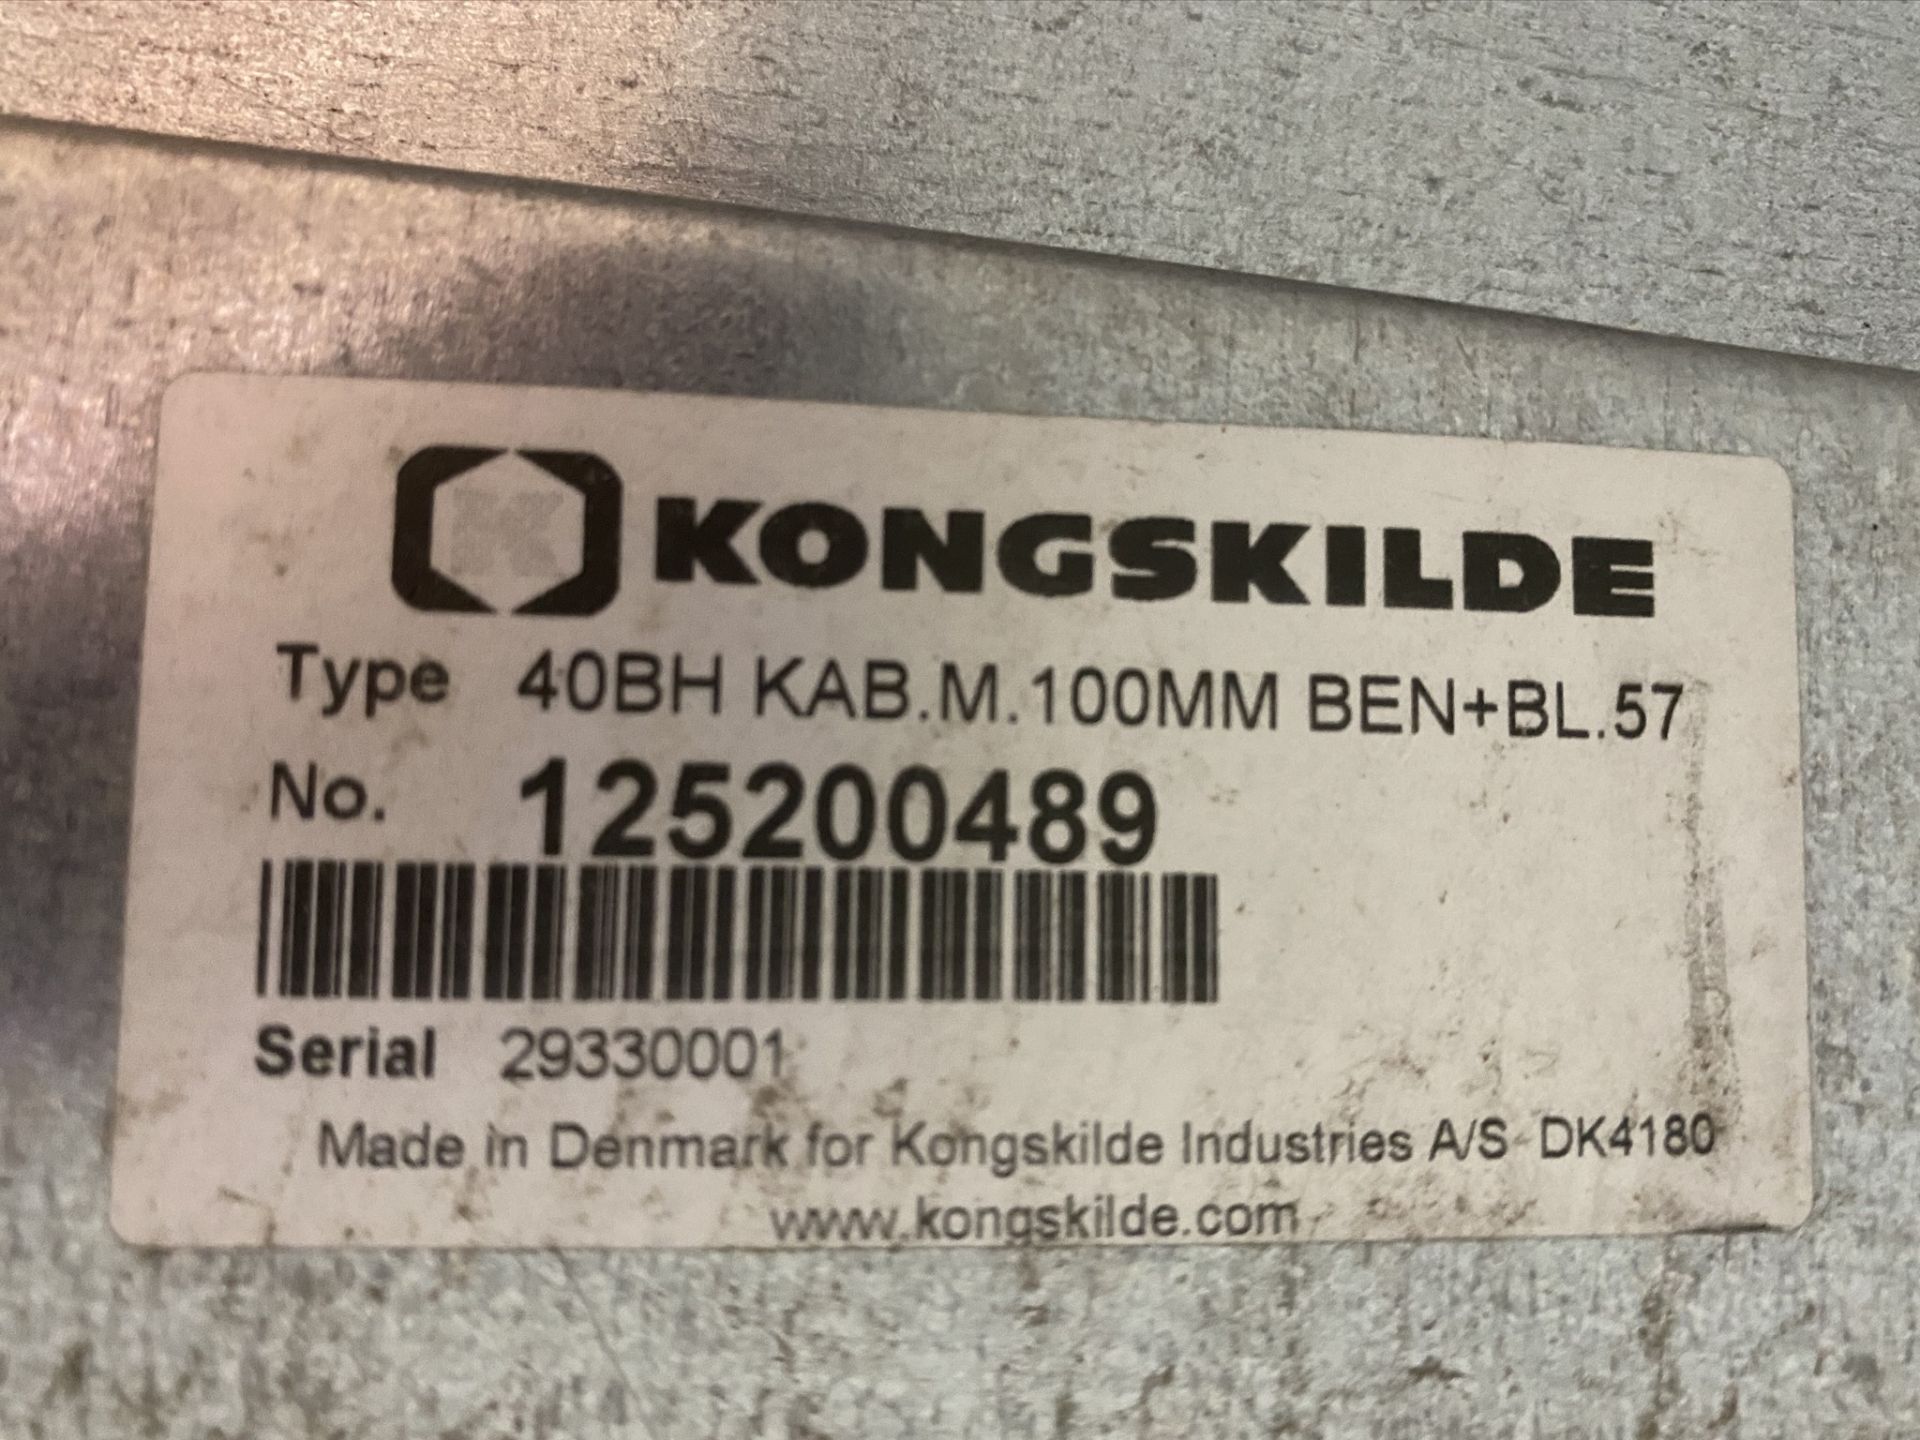 Kongskilde model 125200489 Blower Assembly S/N 29330001 with Kongskilde chimney model 131025043 S/ - Image 3 of 5